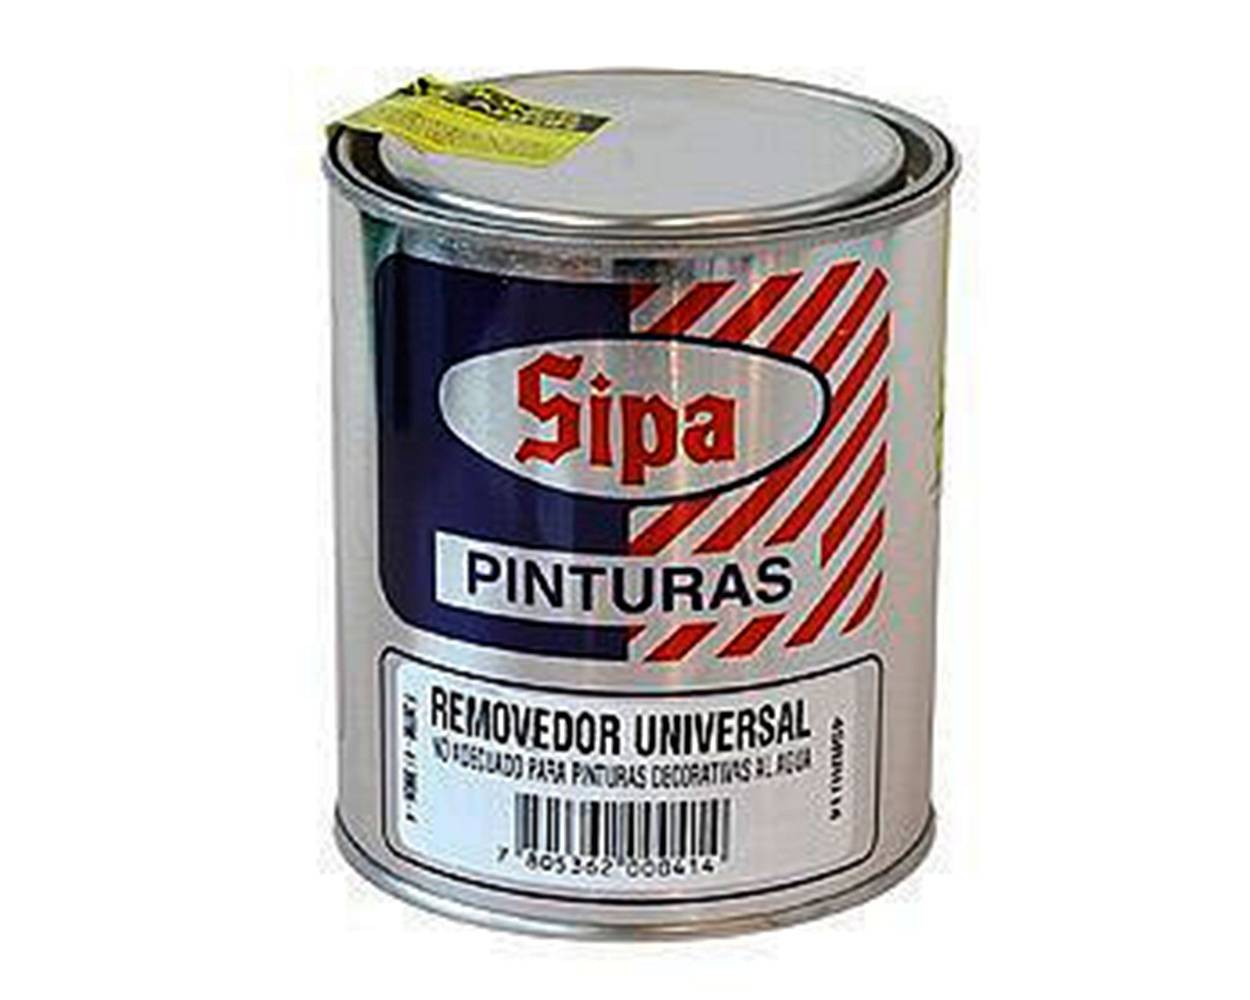 Sipa removedor de pintura universal (946 ml)